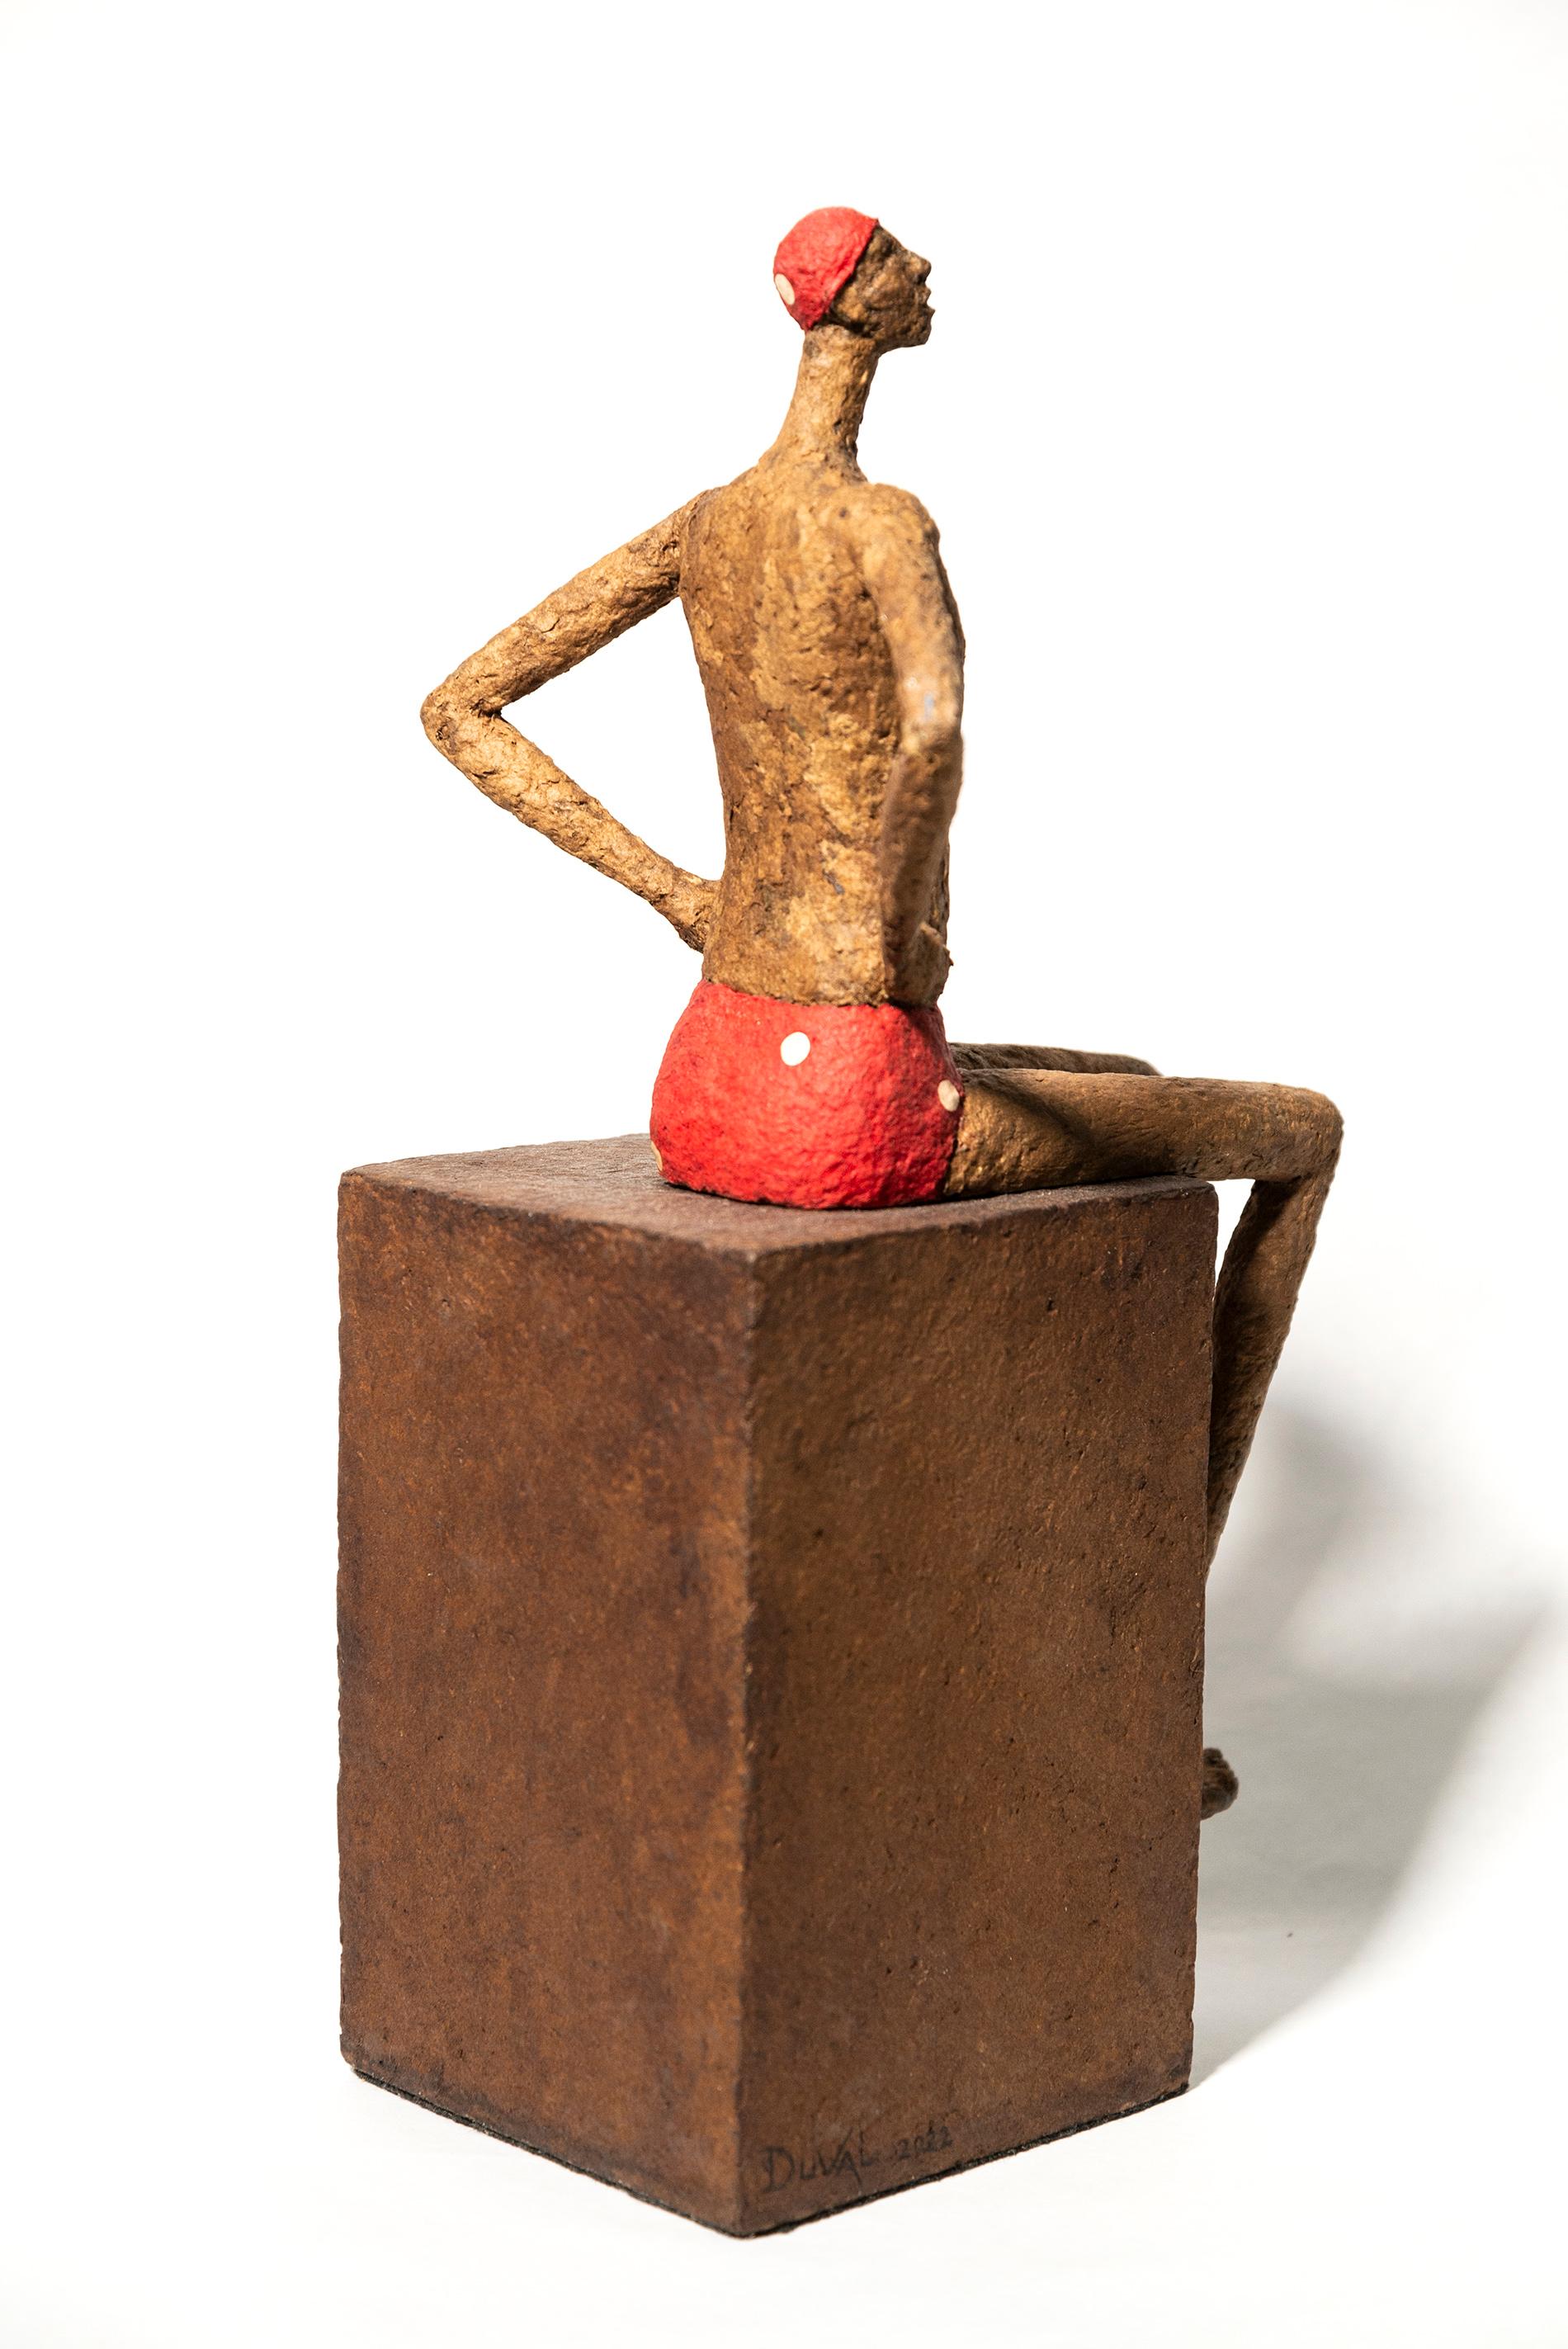 Baigneur à pois (Polka dot Swimmer) - figurative, male, paper mache sculpture - Contemporary Sculpture by Paul Duval